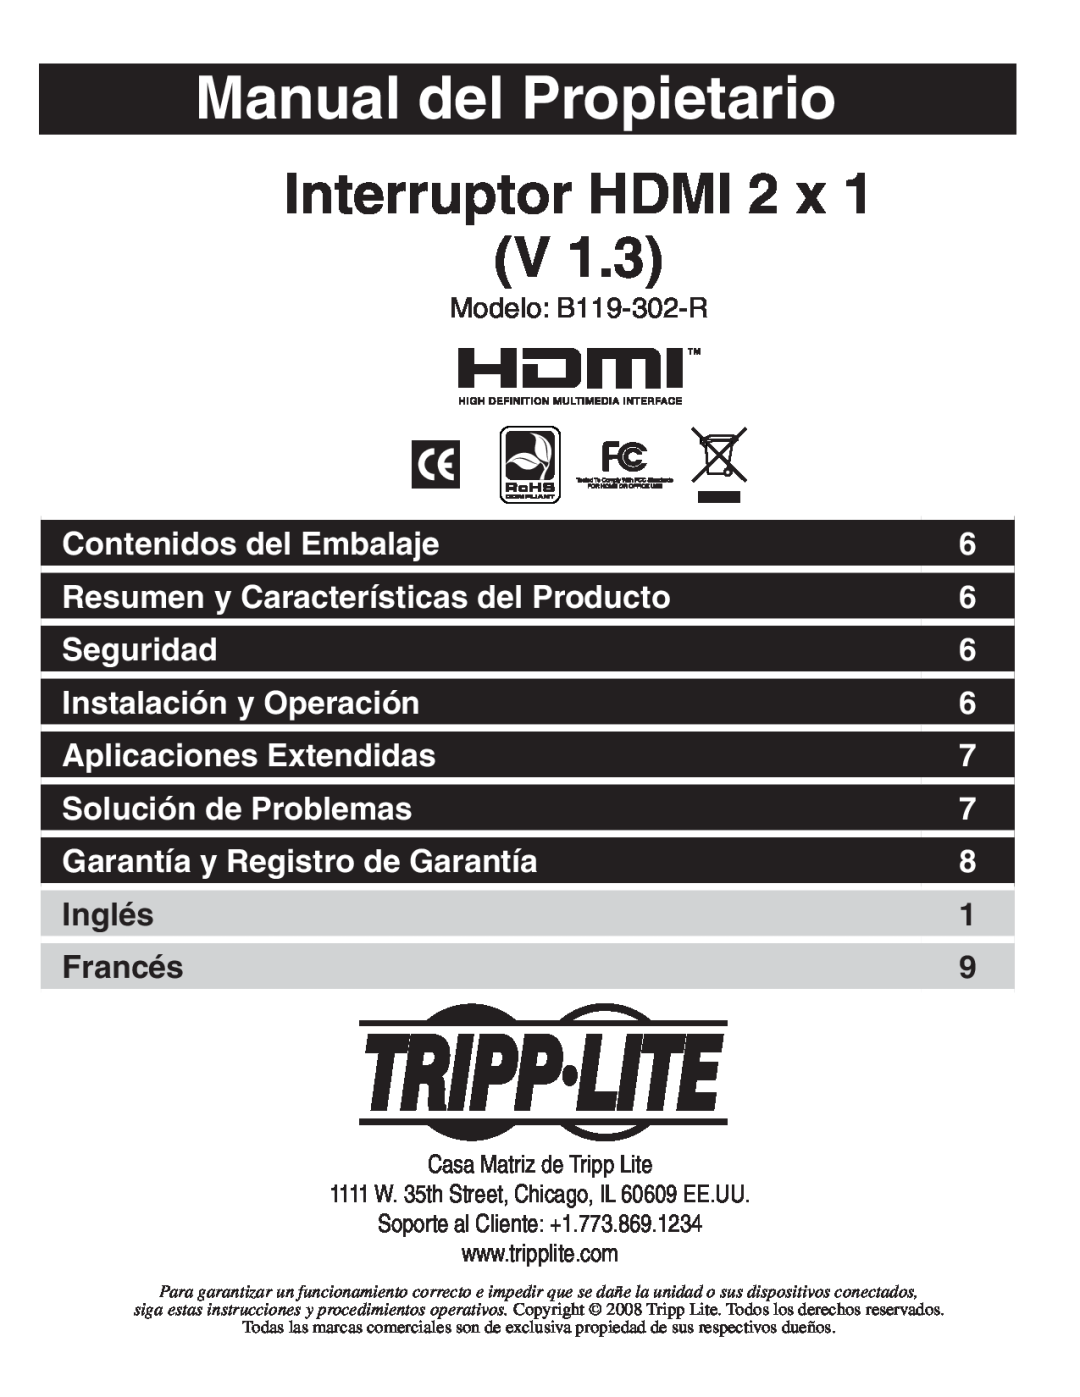 Tripp Lite B119-302-R Manual del Propietario, Interruptor HDMI 2 x V, Contenidos del Embalaje, Seguridad, Inglés, Francés 